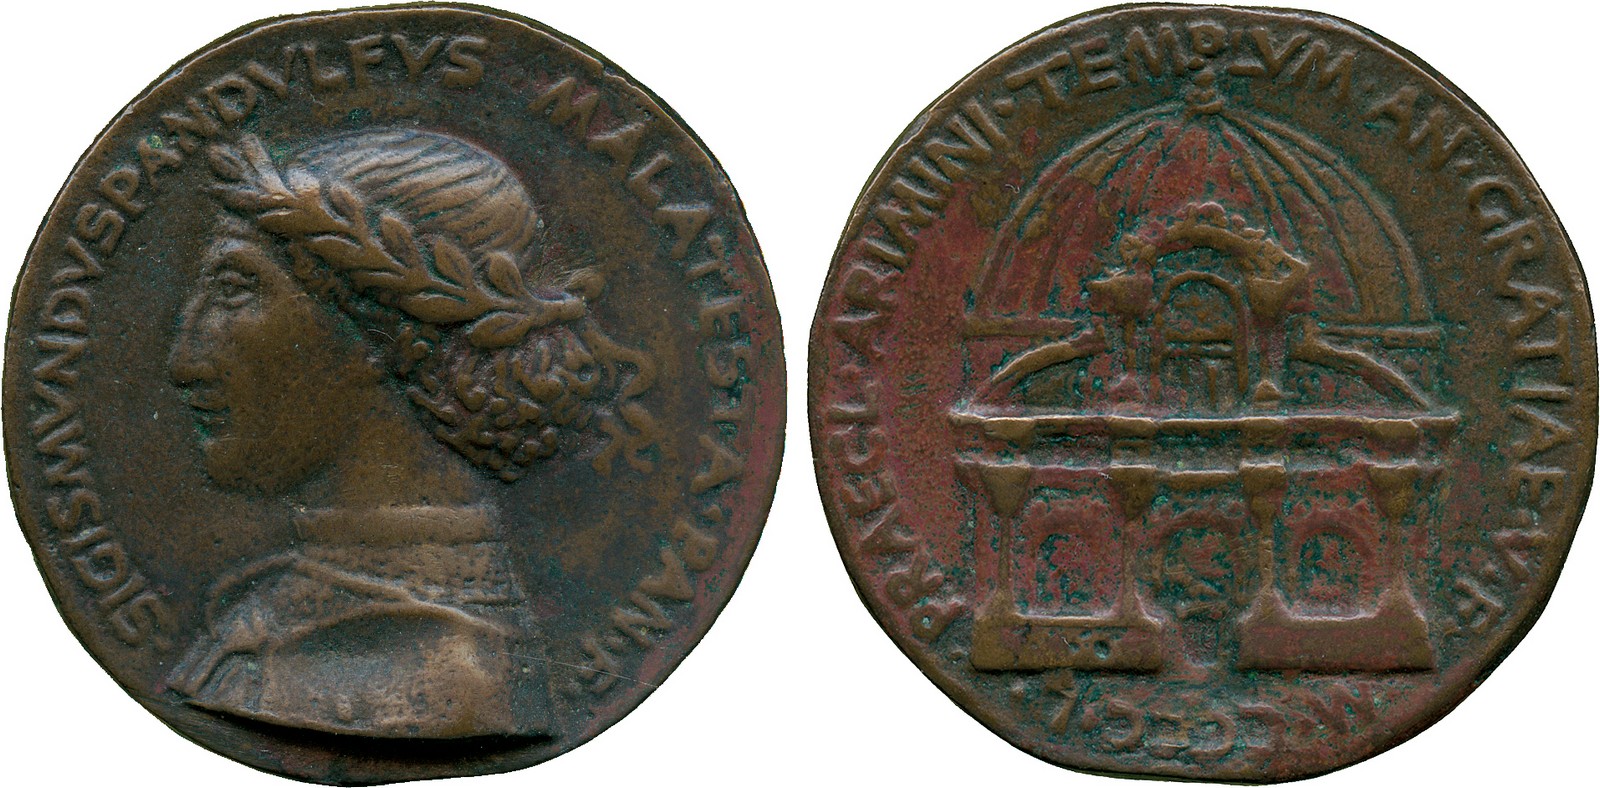 COMMEMORATIVE MEDALS, WORLD MEDALS, Italy, Sigismondo Pandolfo Malatesta (1417-1468), Lord of Rimini